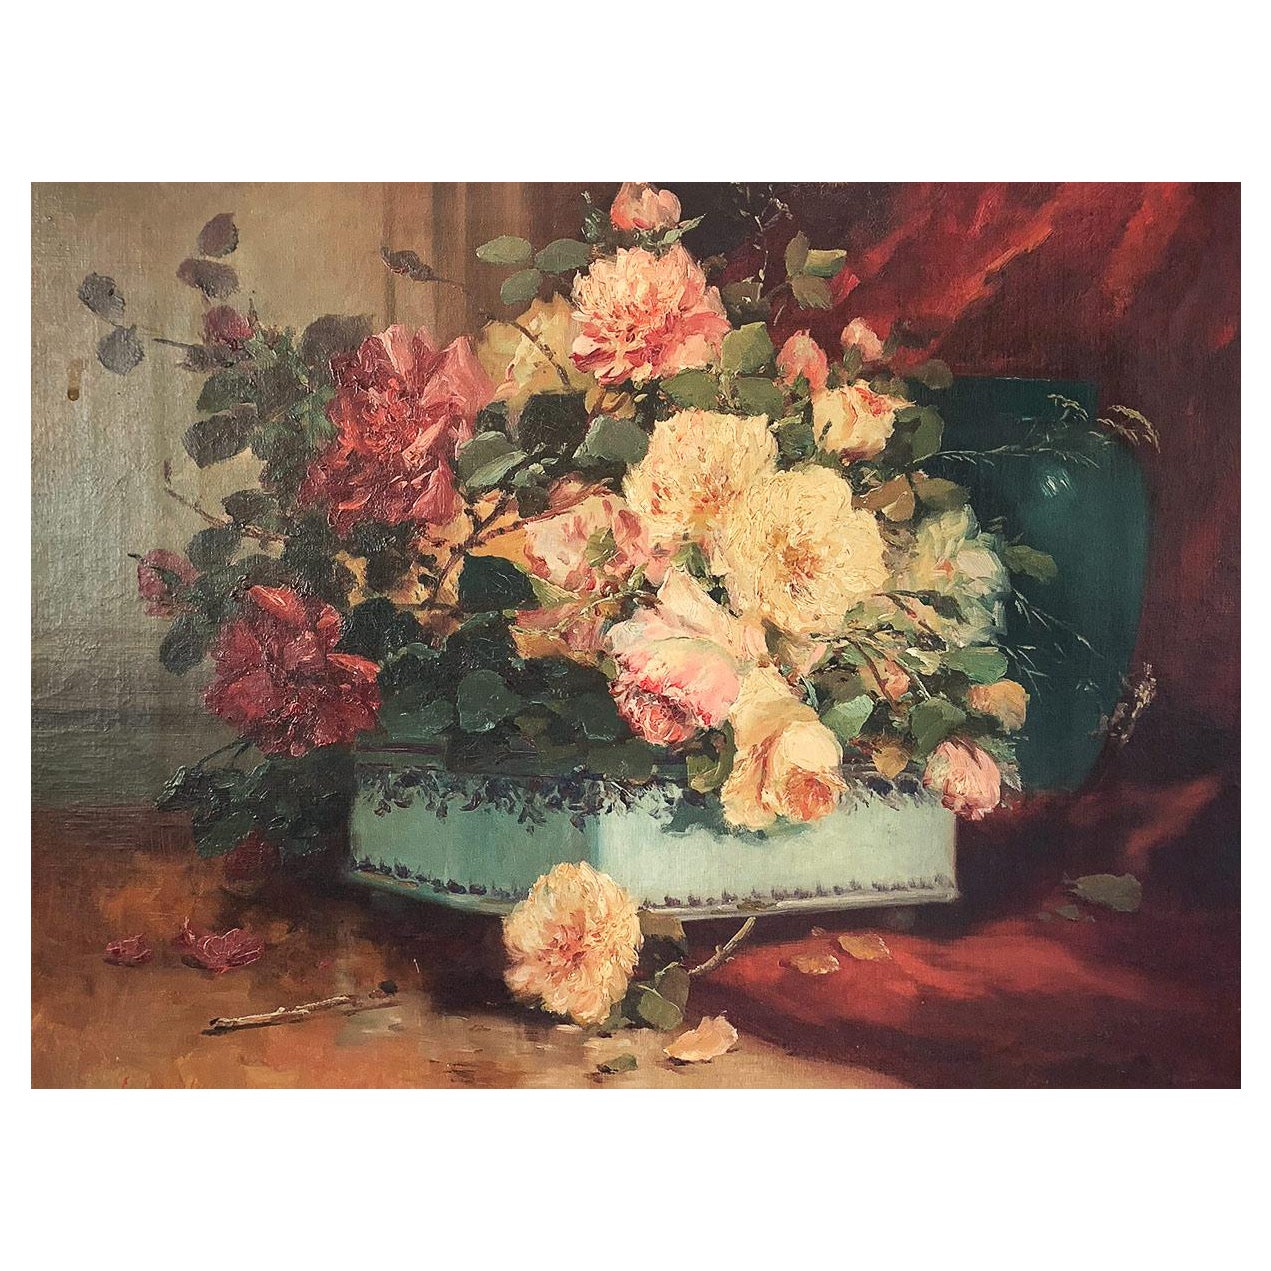 Cauchois Henri "Basket of Flowers" For Sale